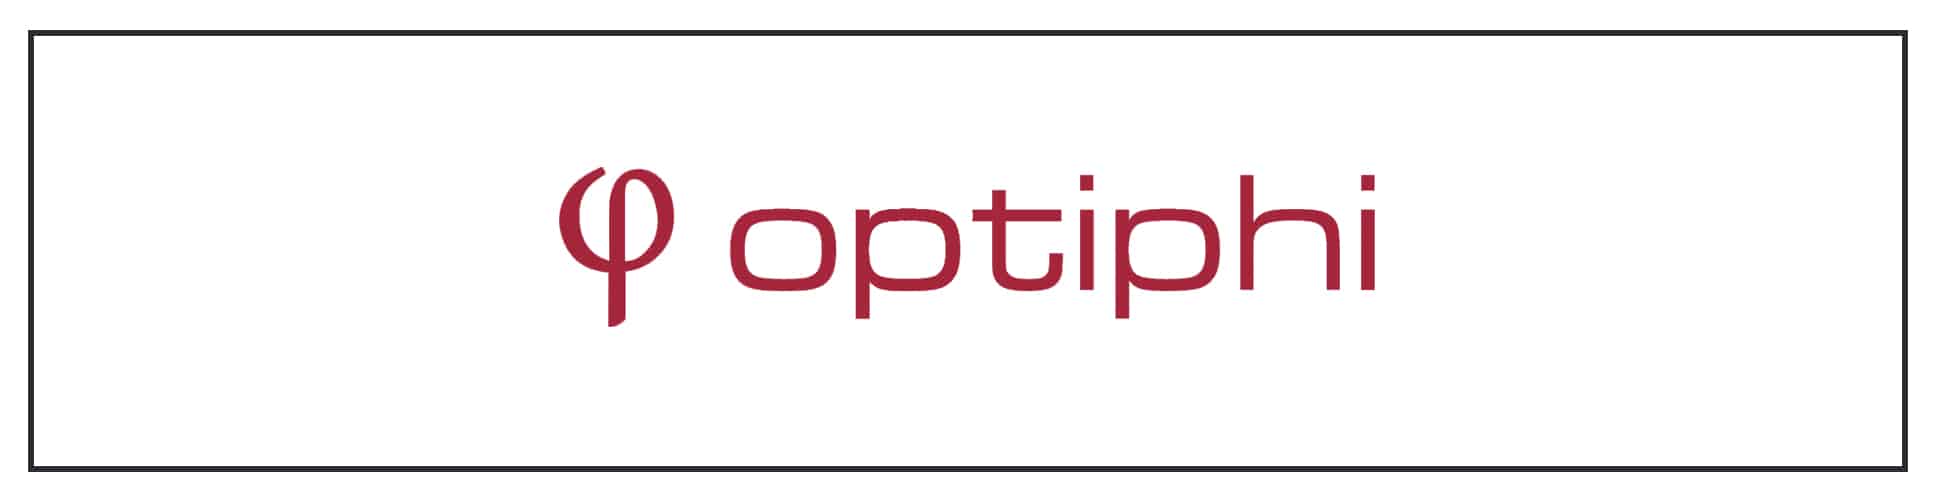 Optphii logo on a white background.